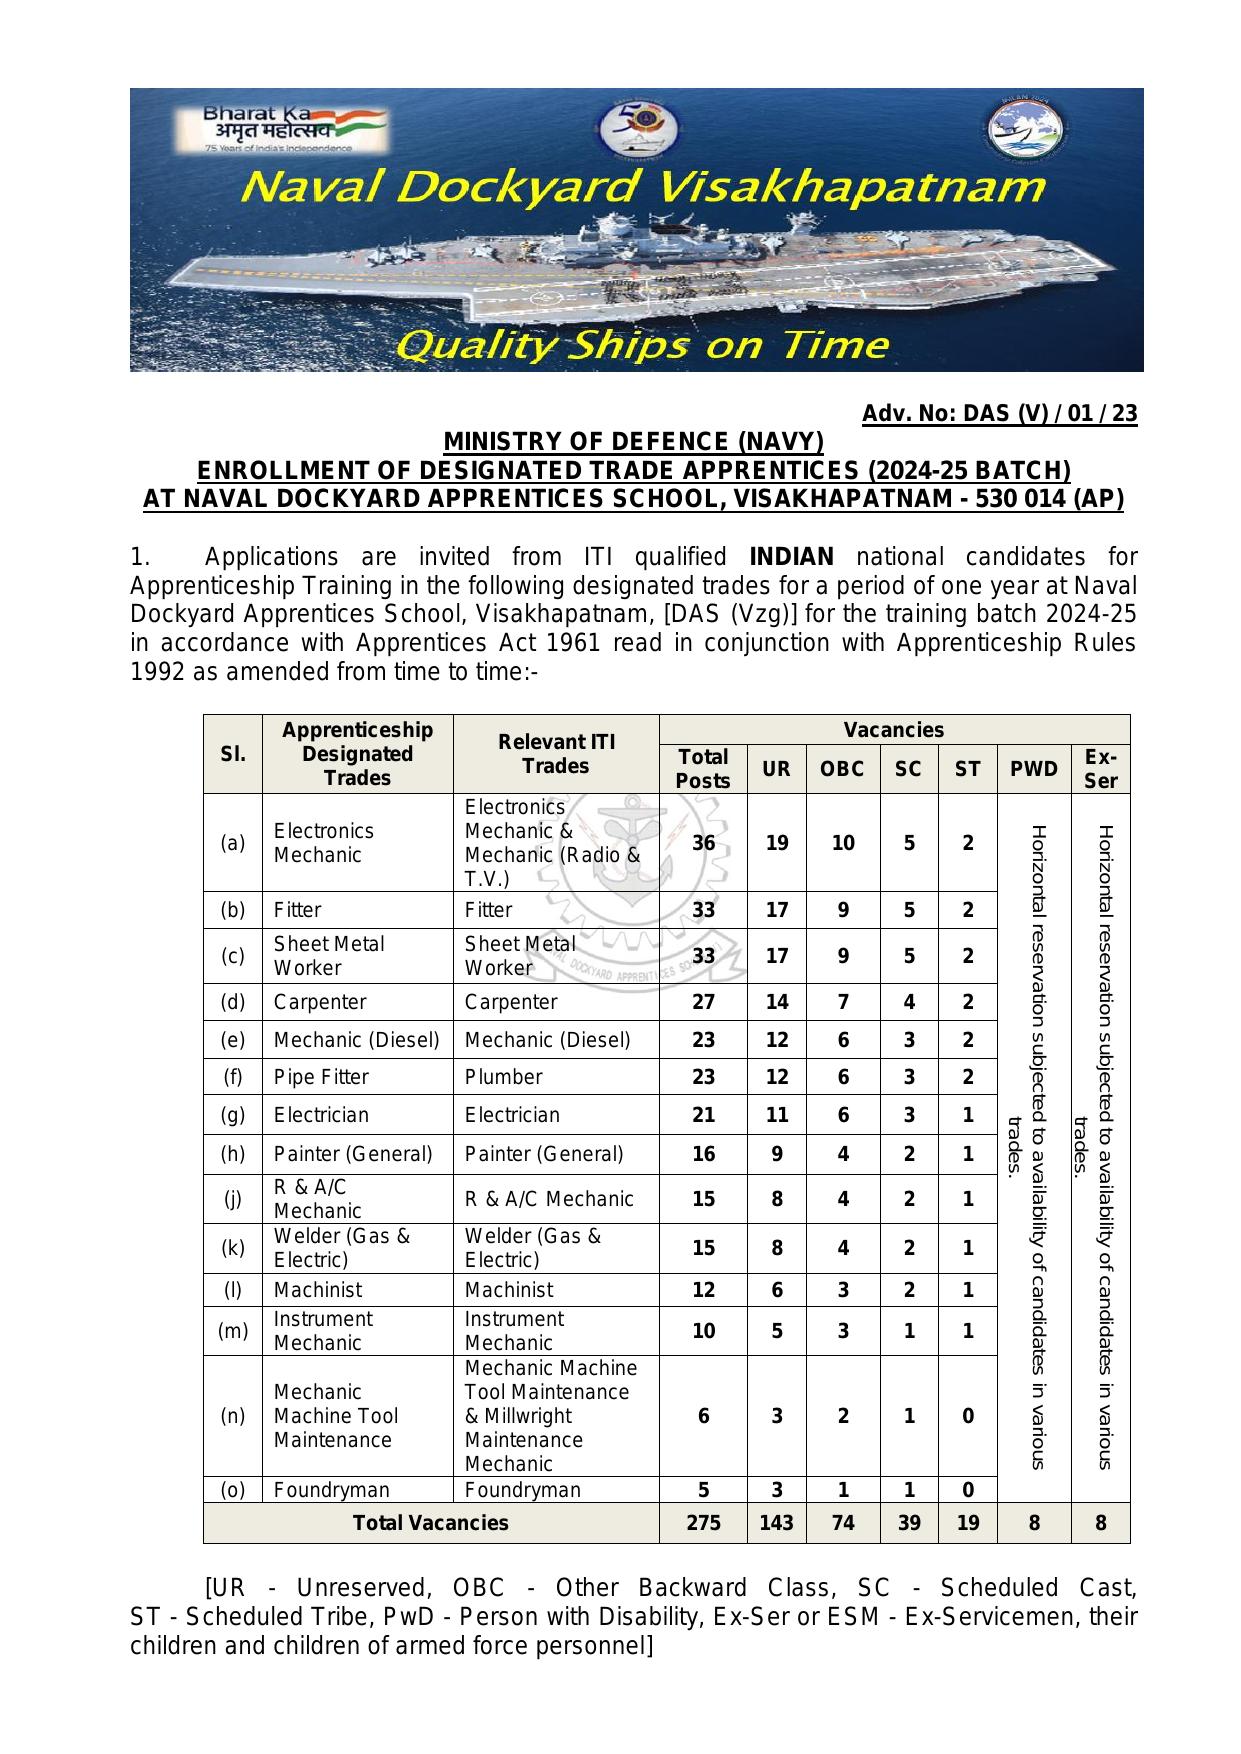 Naval Dockyard Visakhapatnam ITI Trade Apprentice Recruitment 2023 - Page 1